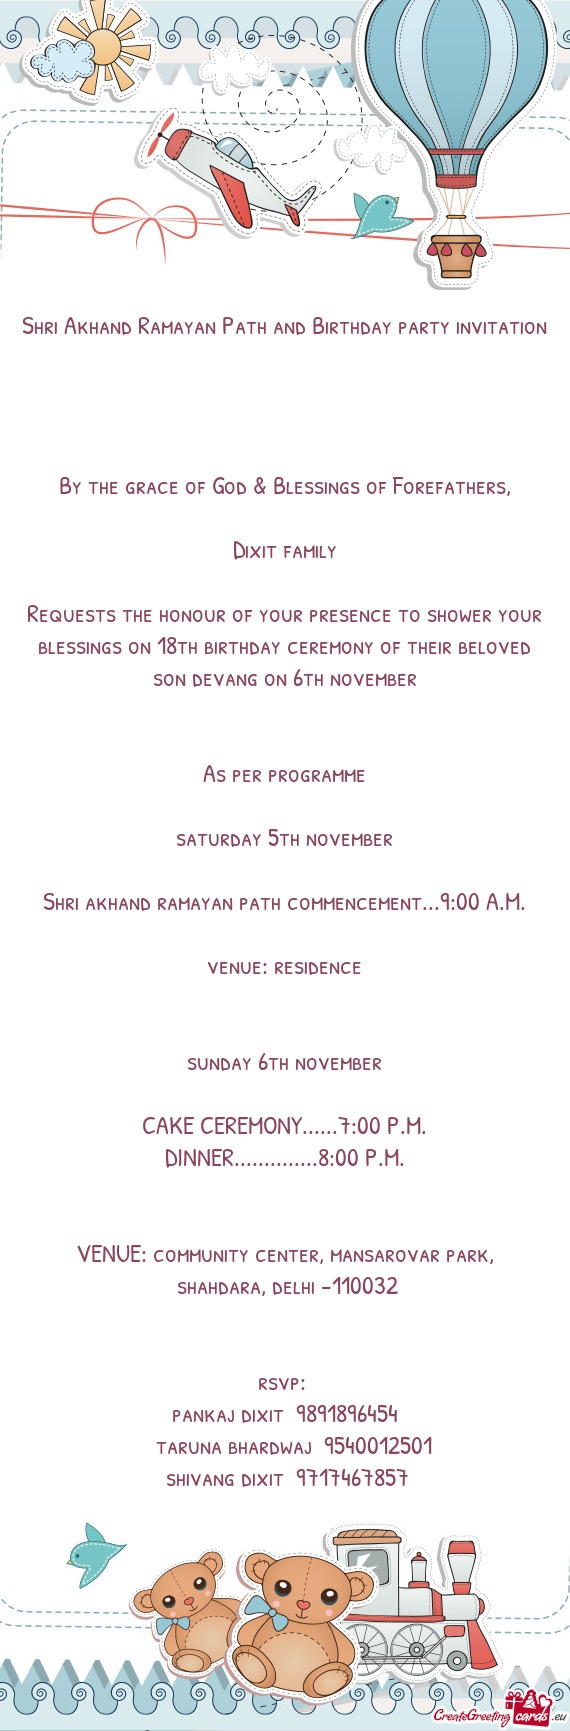 Shri Akhand Ramayan Path and Birthday party invitation